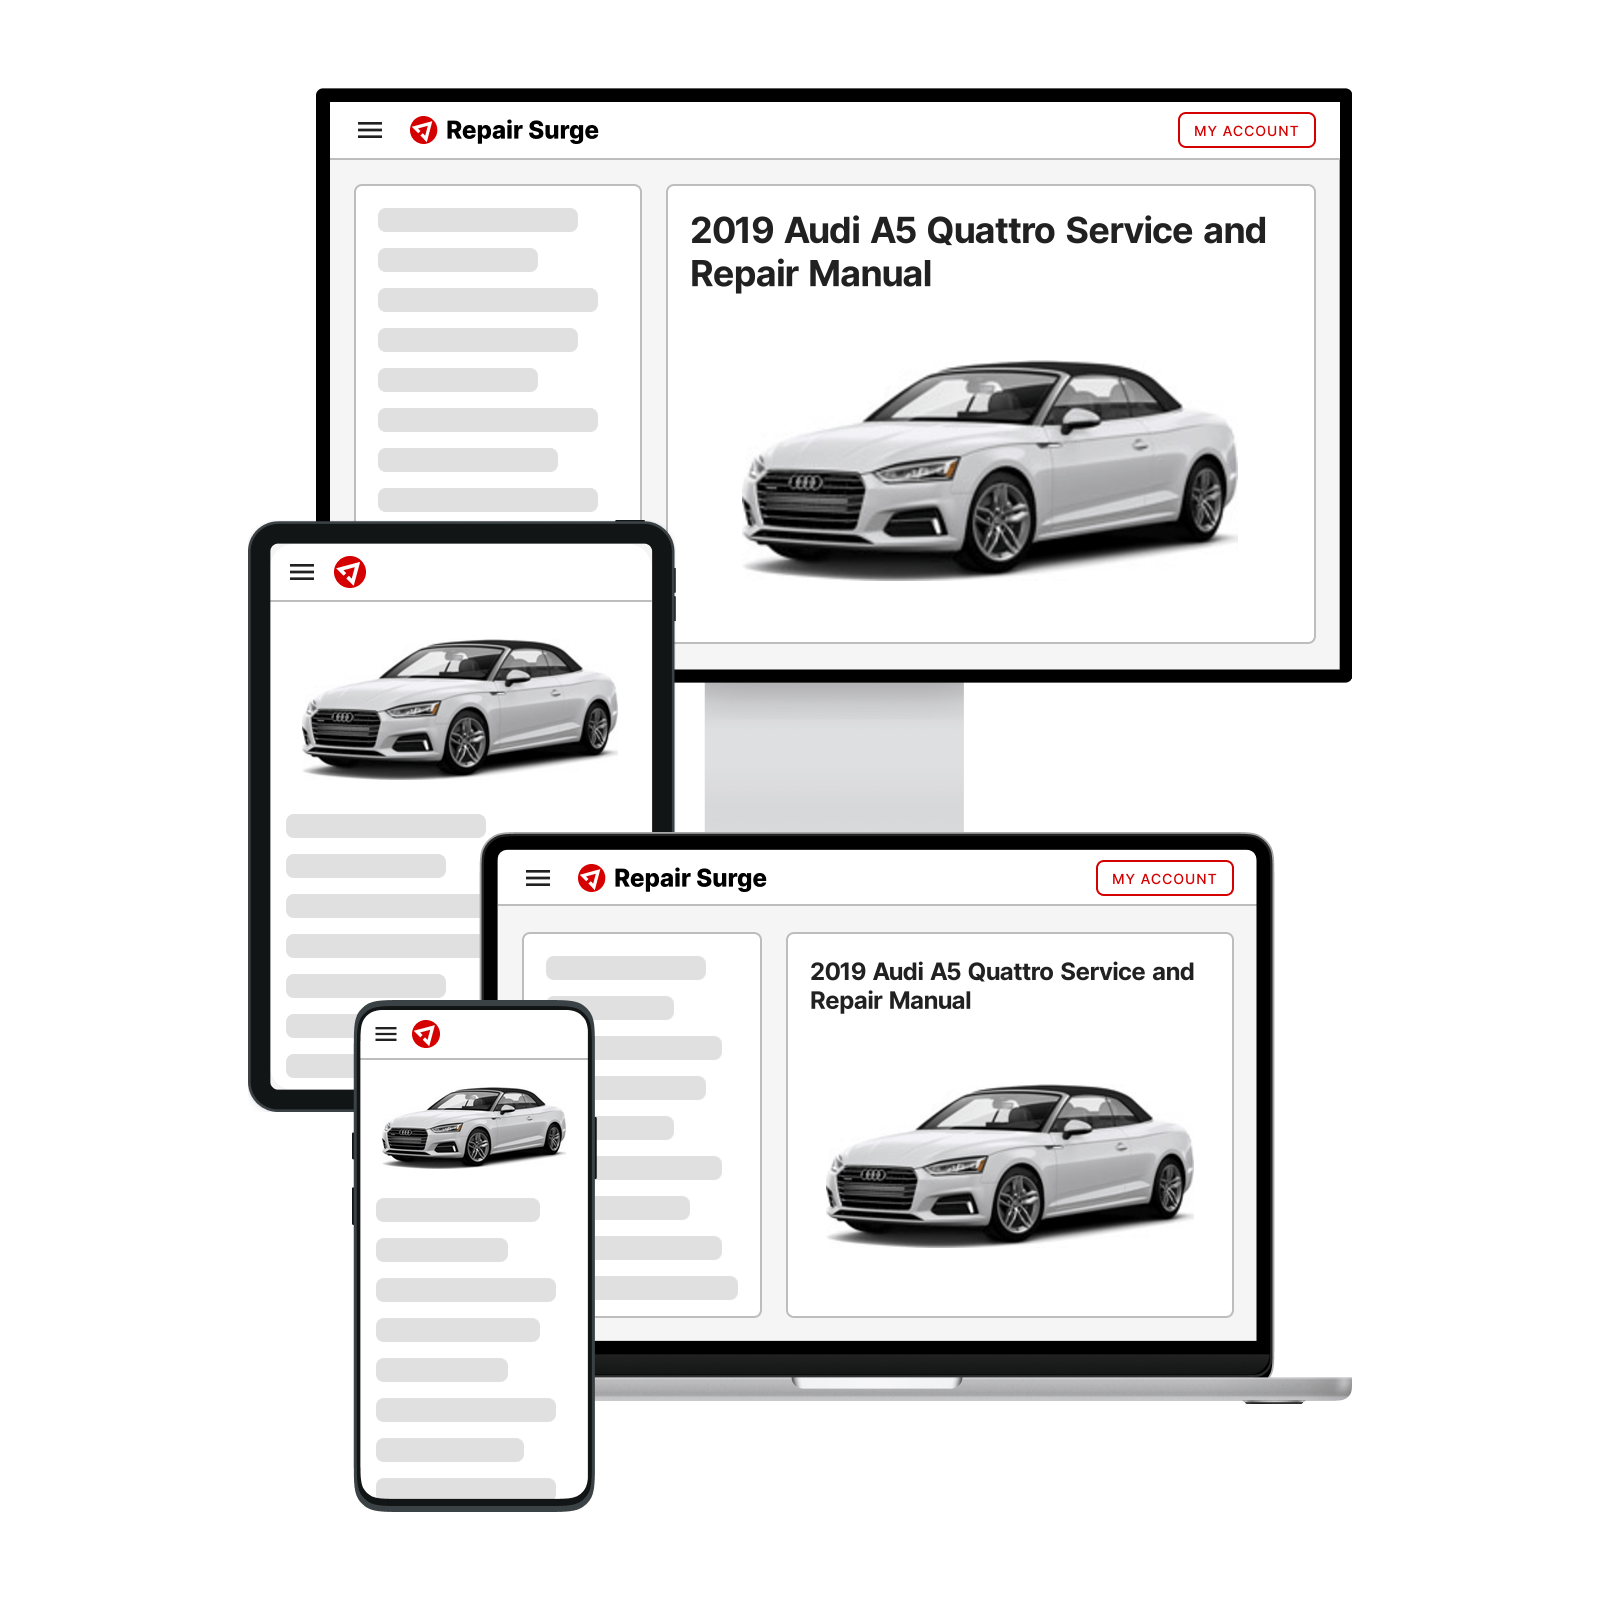 2019 Audi A5 Quattro service and repair manual hero image